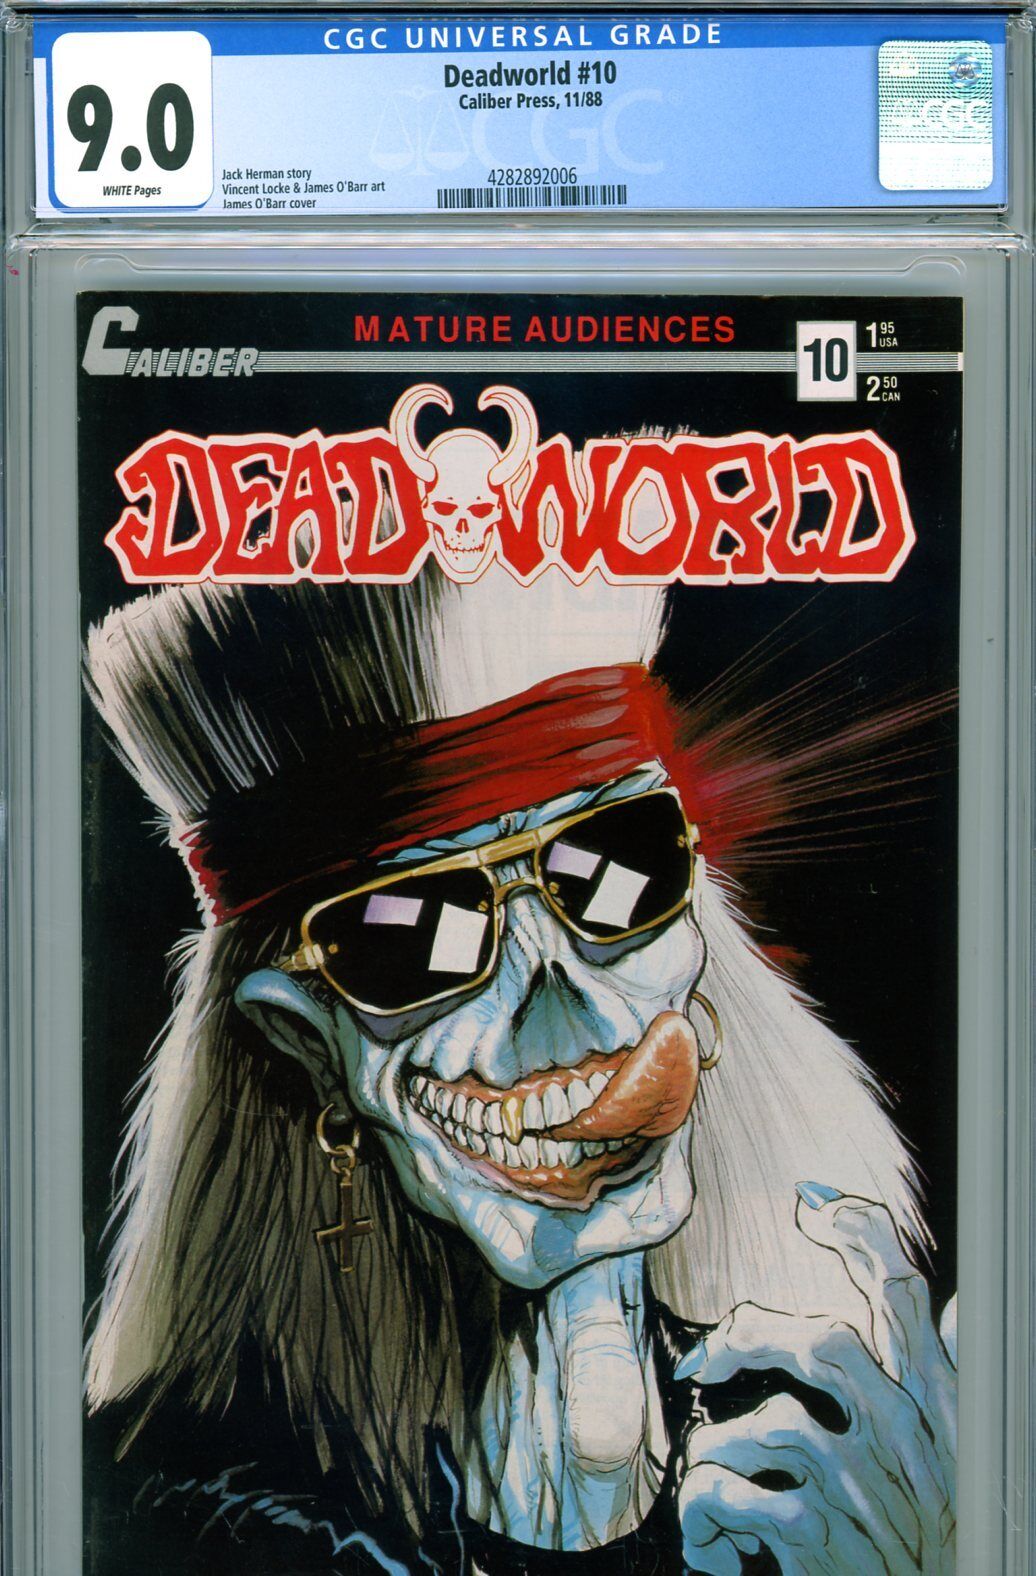 Deadworld #10 CGC GRADED 9.0 - O'Barr art/cover - Herman story - Caliber Press